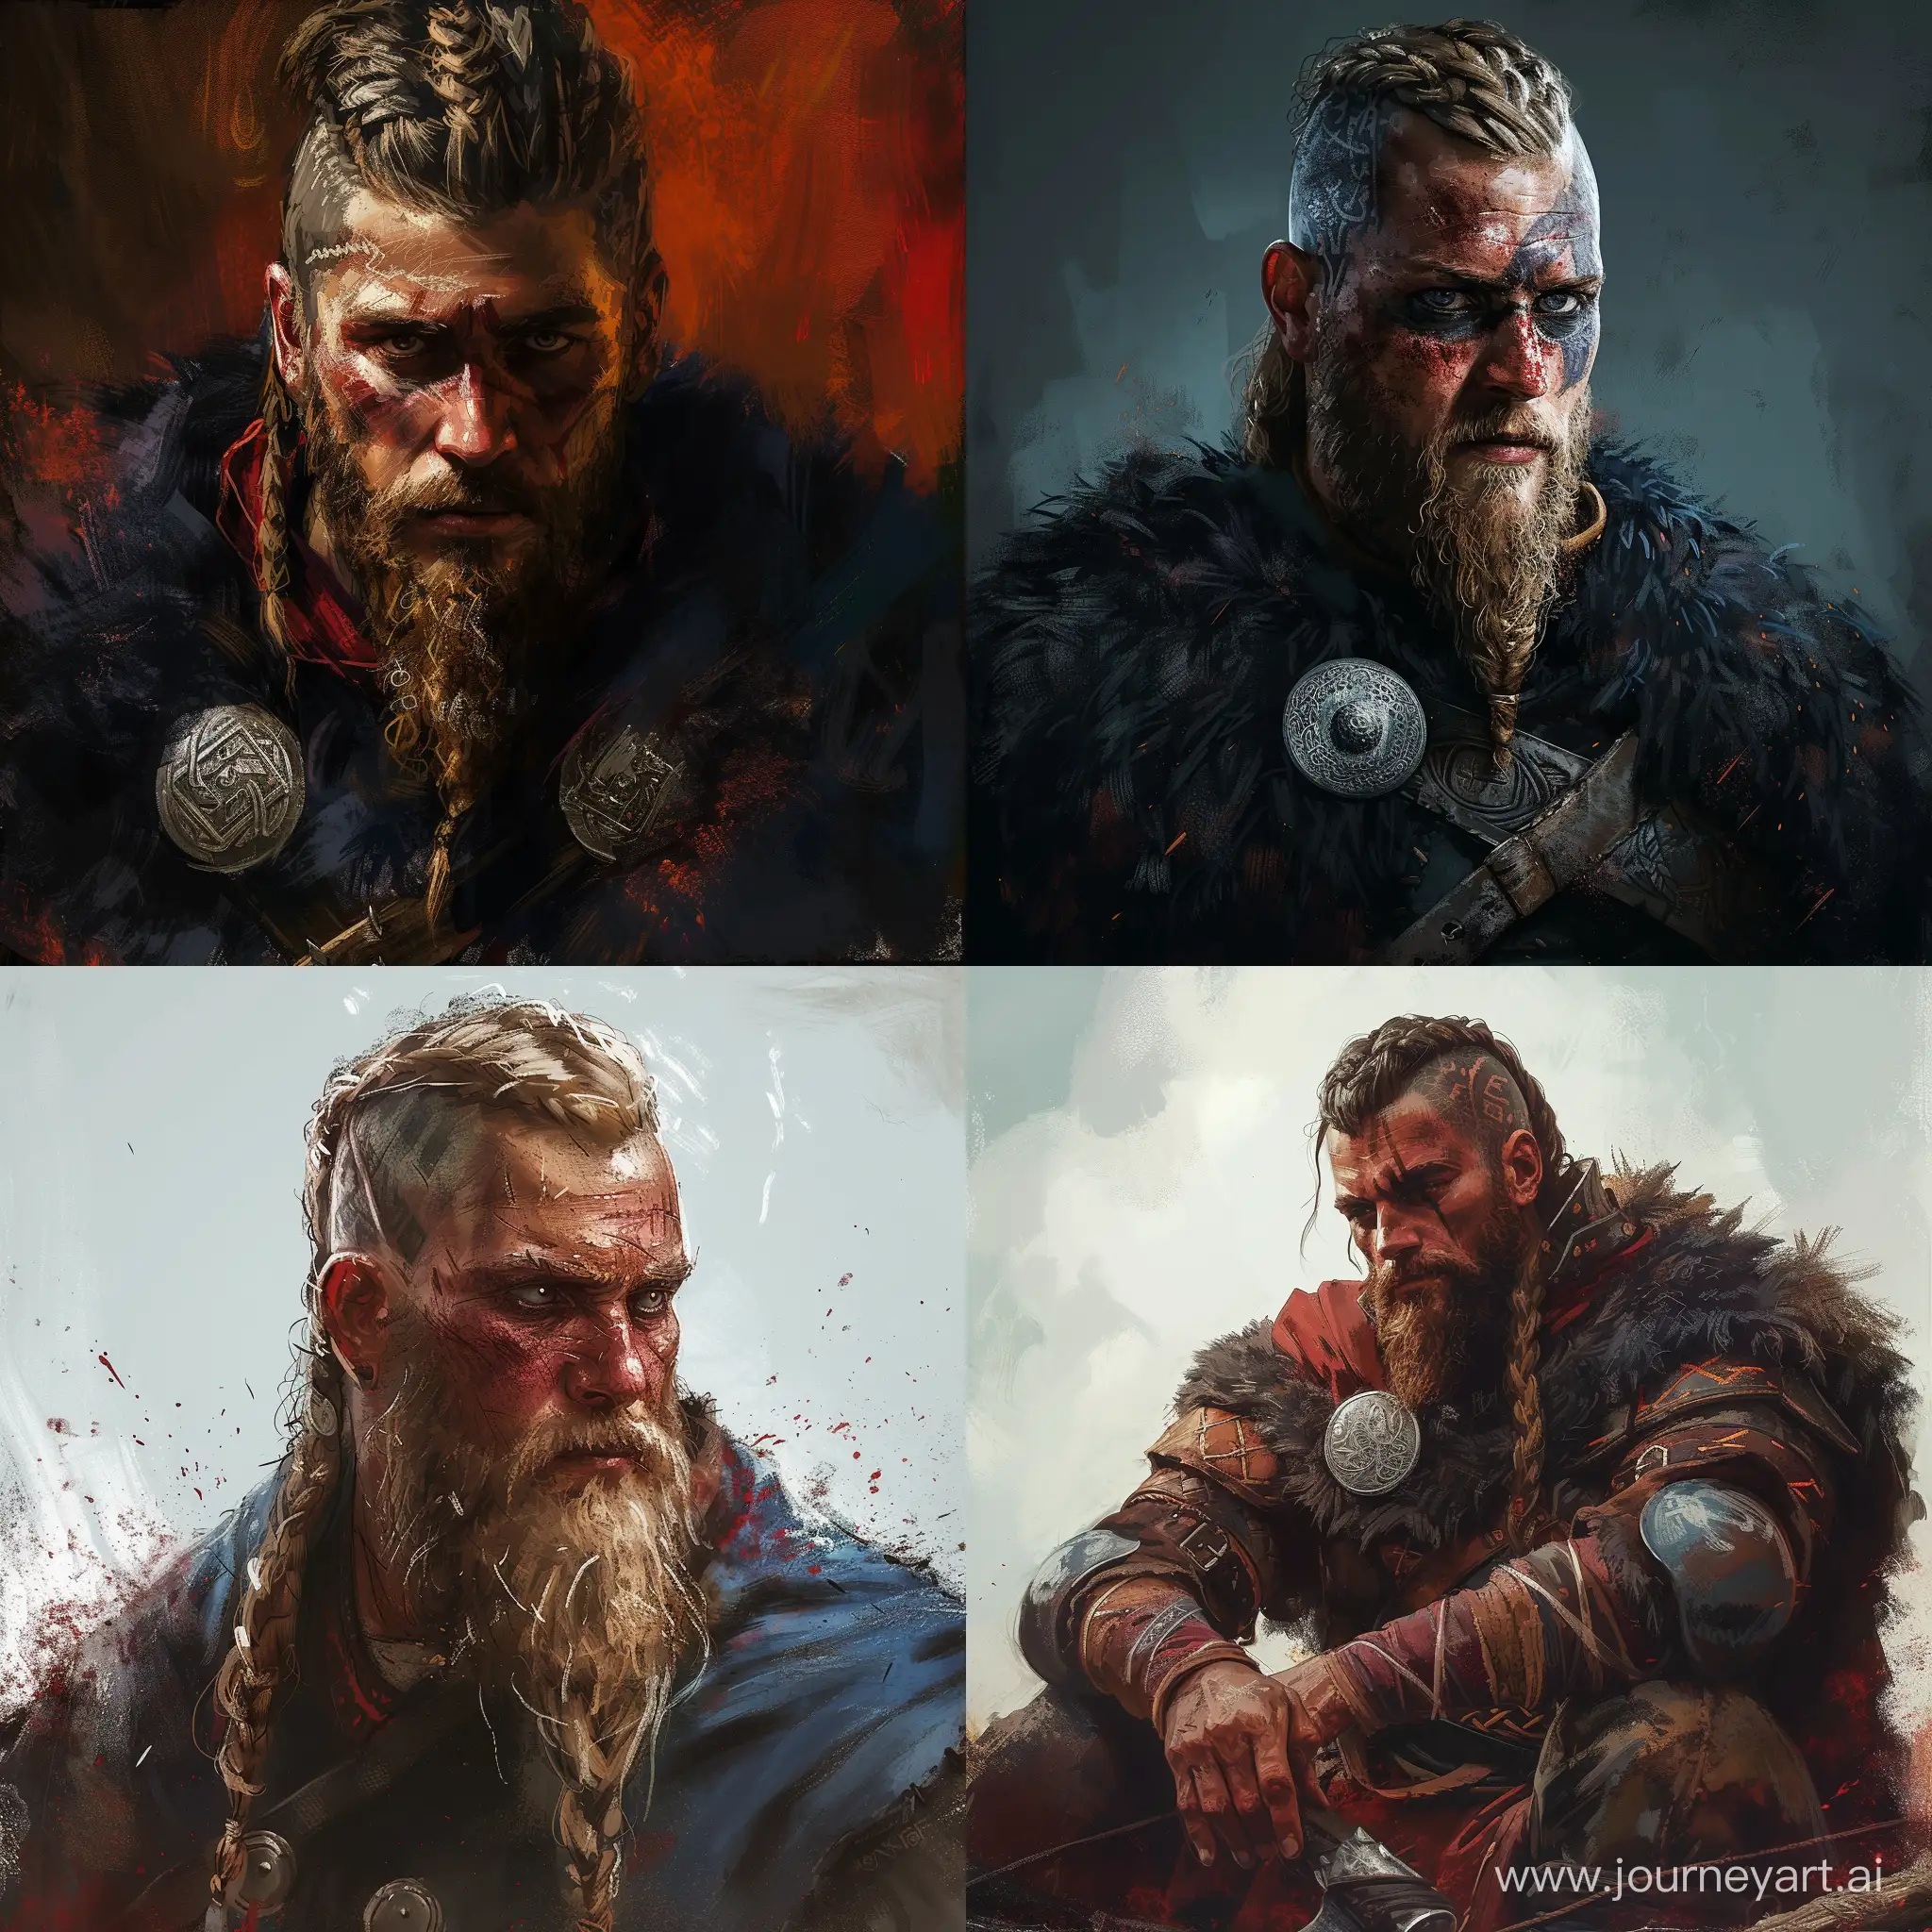 Mighty-Viking-Warrior-Portrait-in-Digital-Art